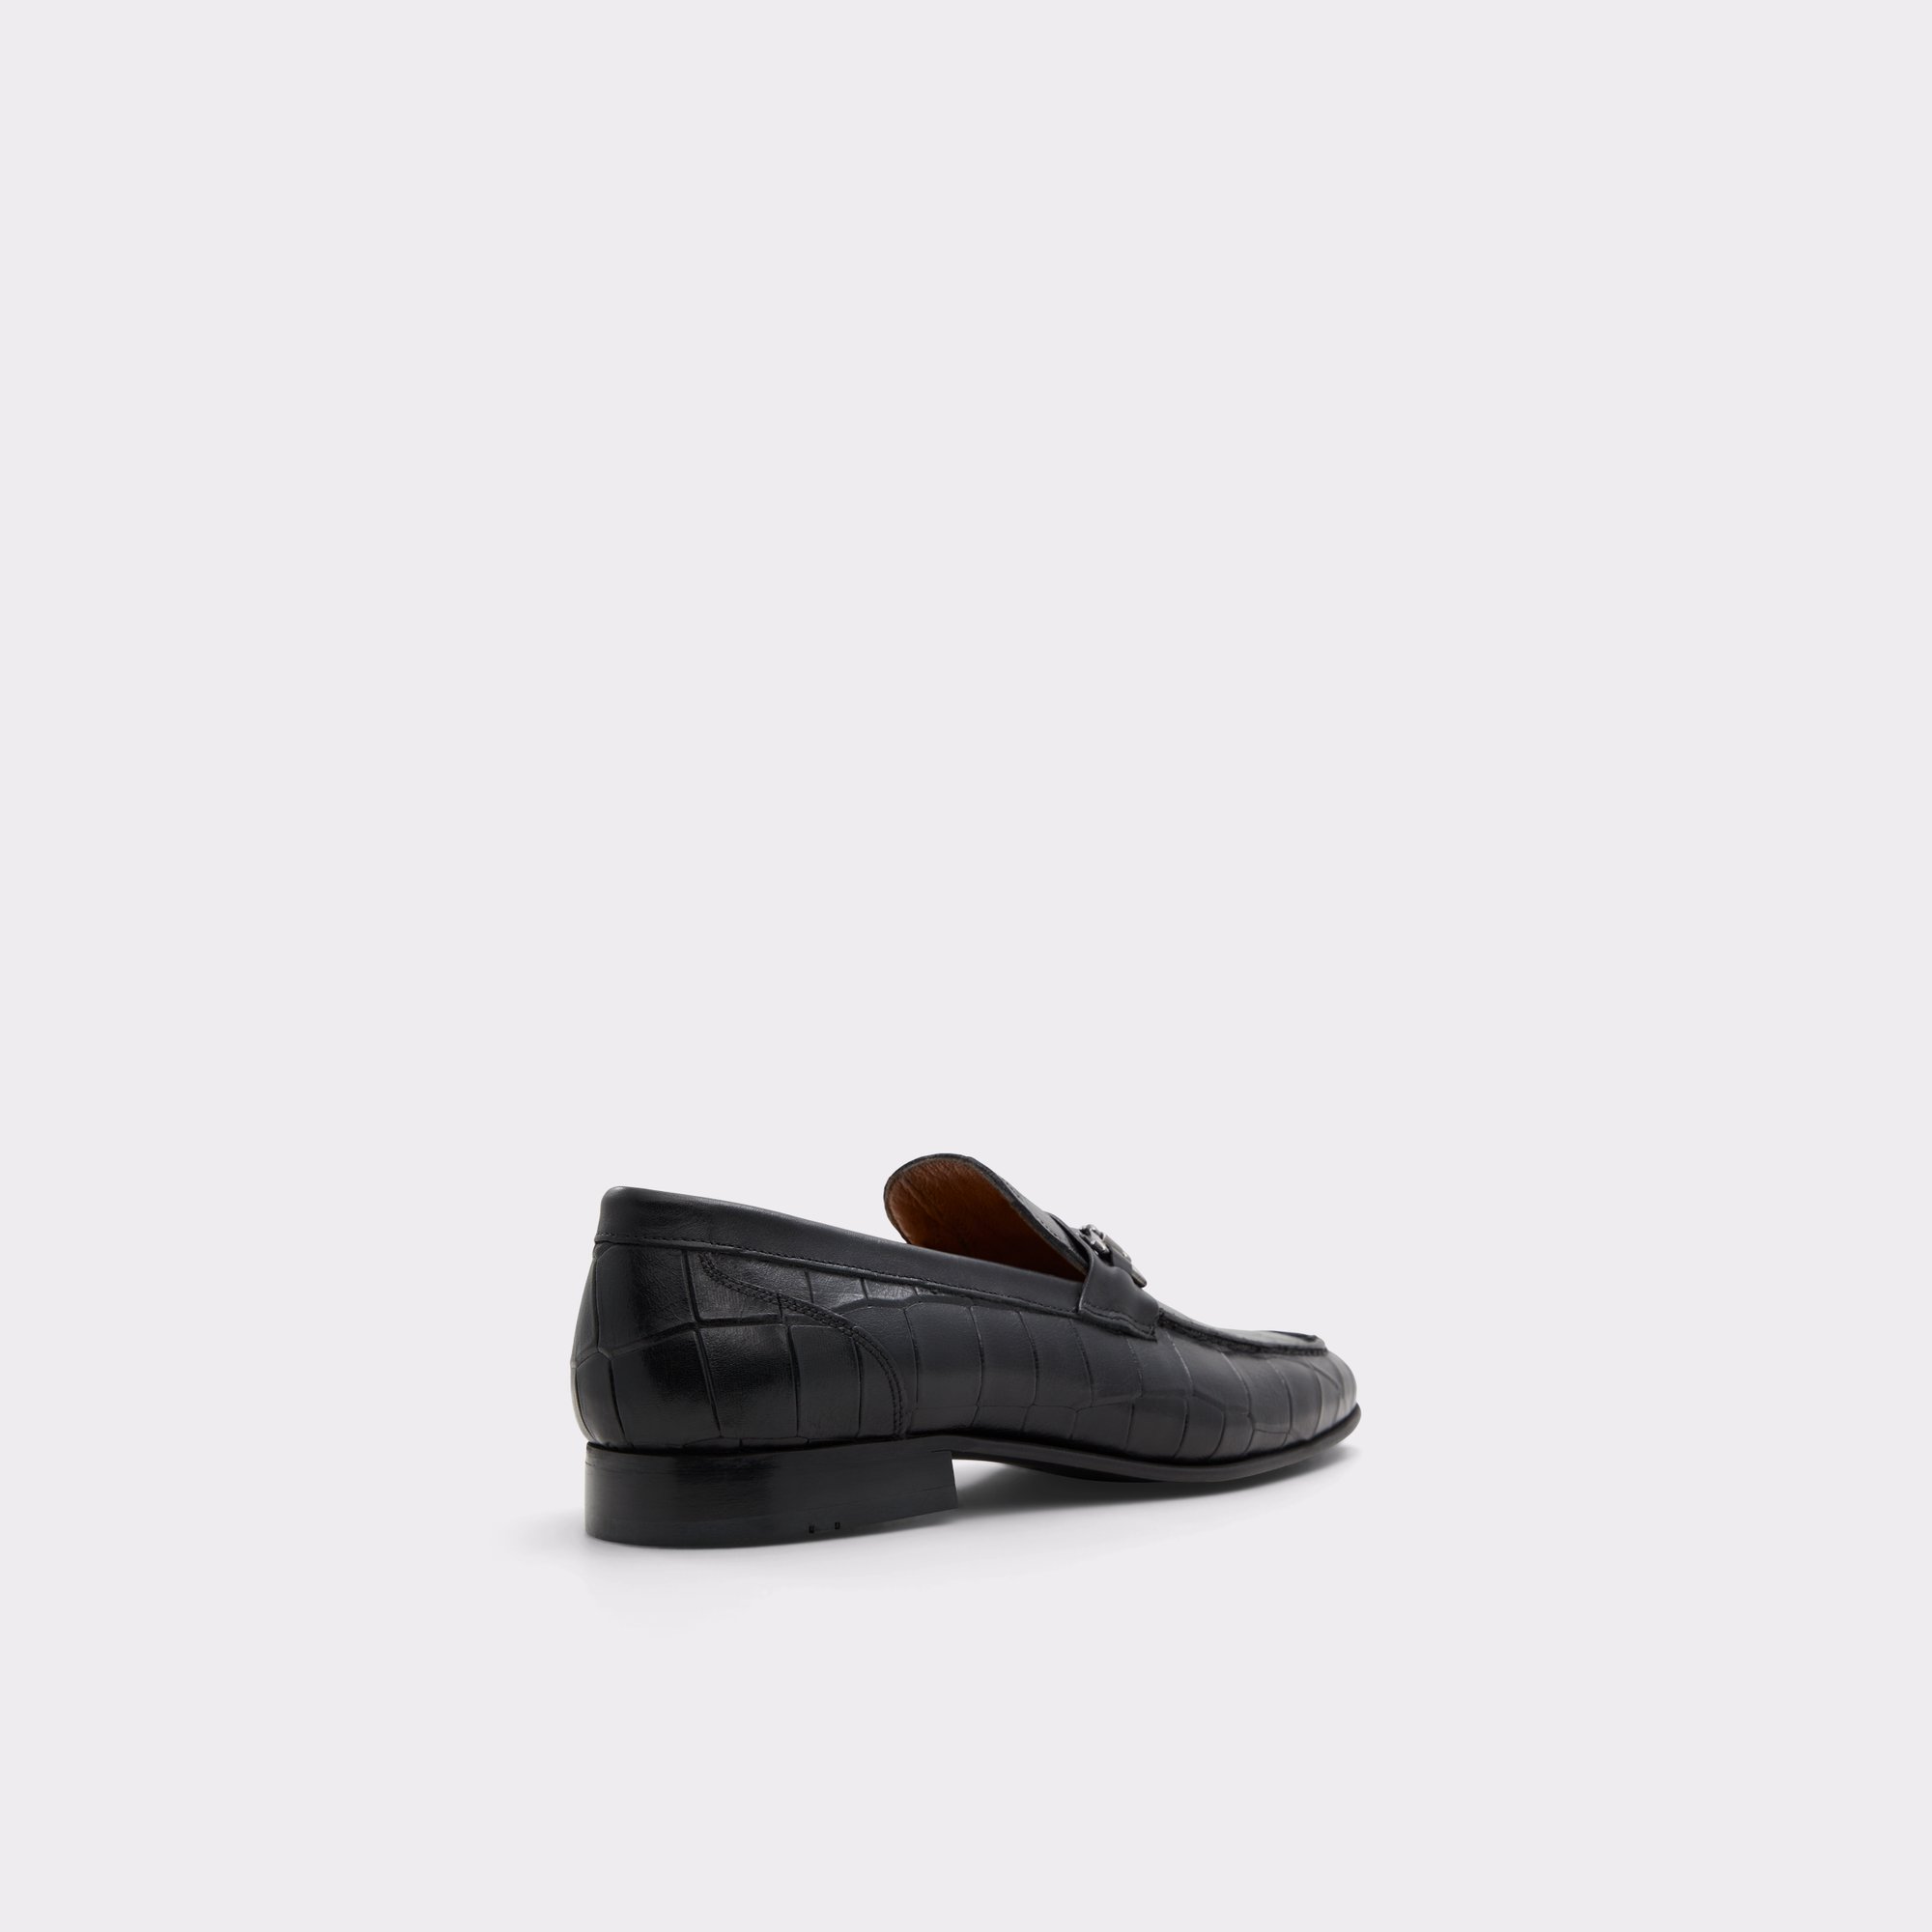 Esco Black Men's Loafers & Slip-Ons | ALDO Canada